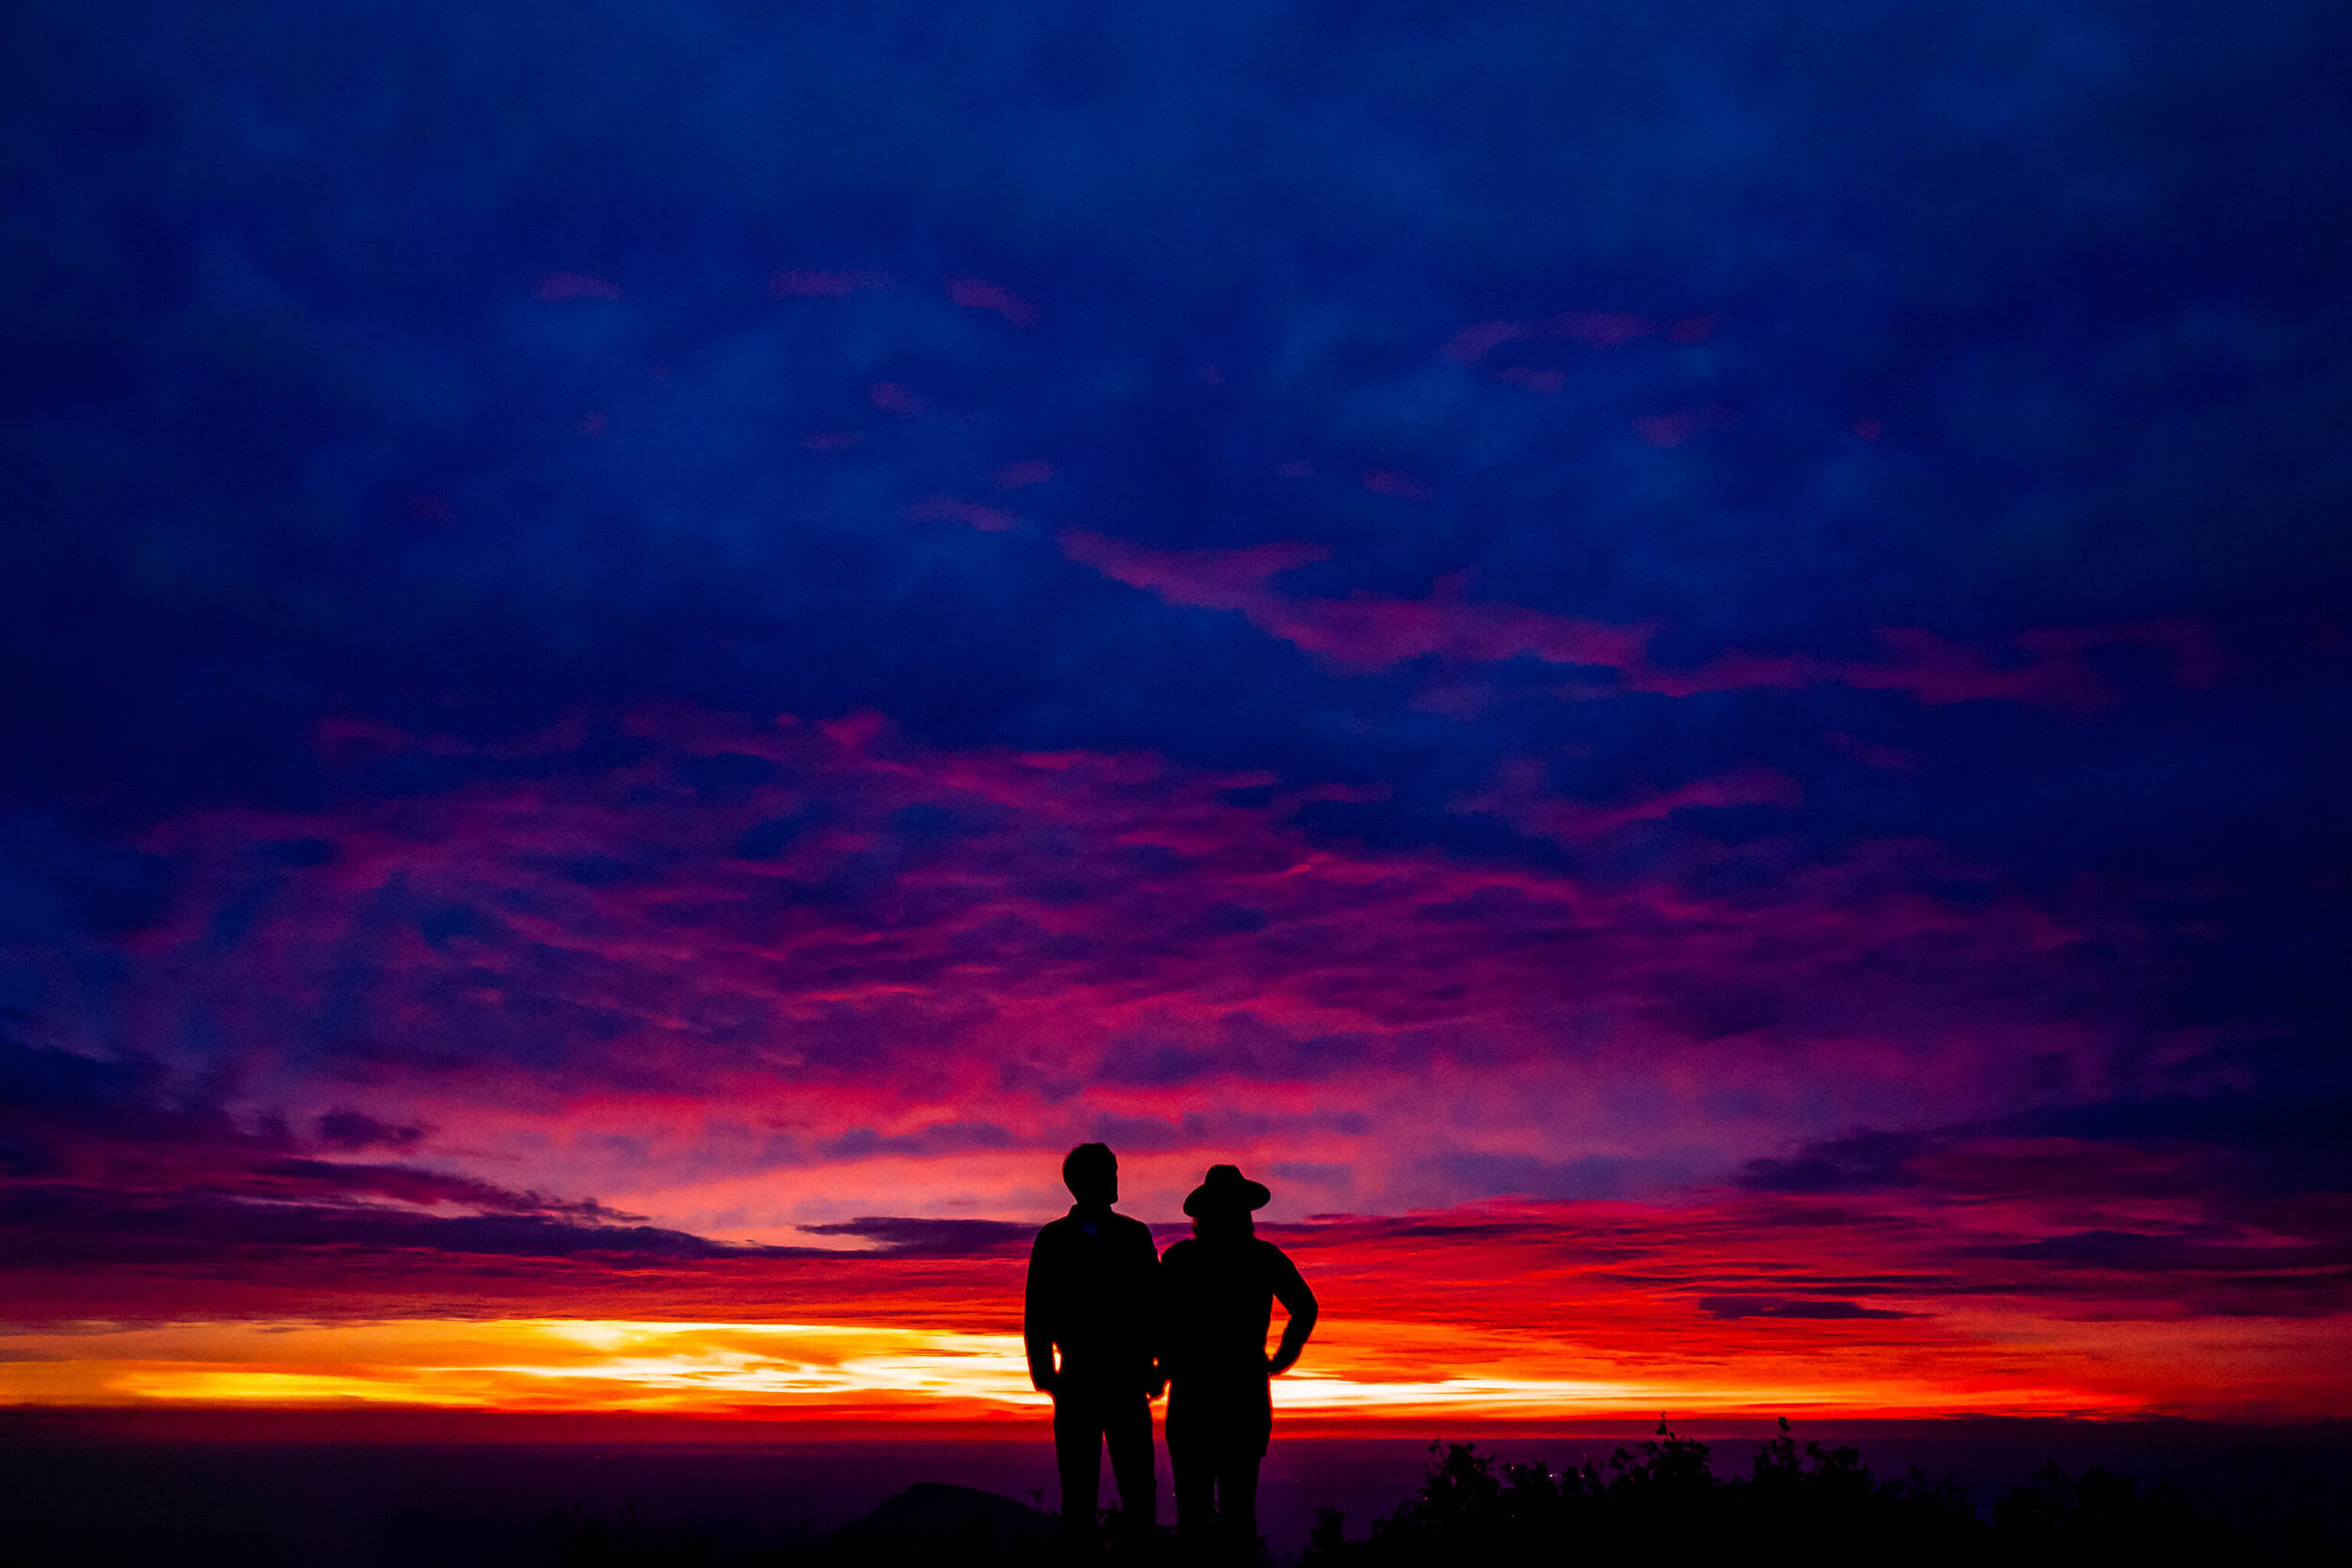 hawksbill-summit-adventure-session-silhouette-sunrise-shenandoah-at-dawn-virginia-.jpg